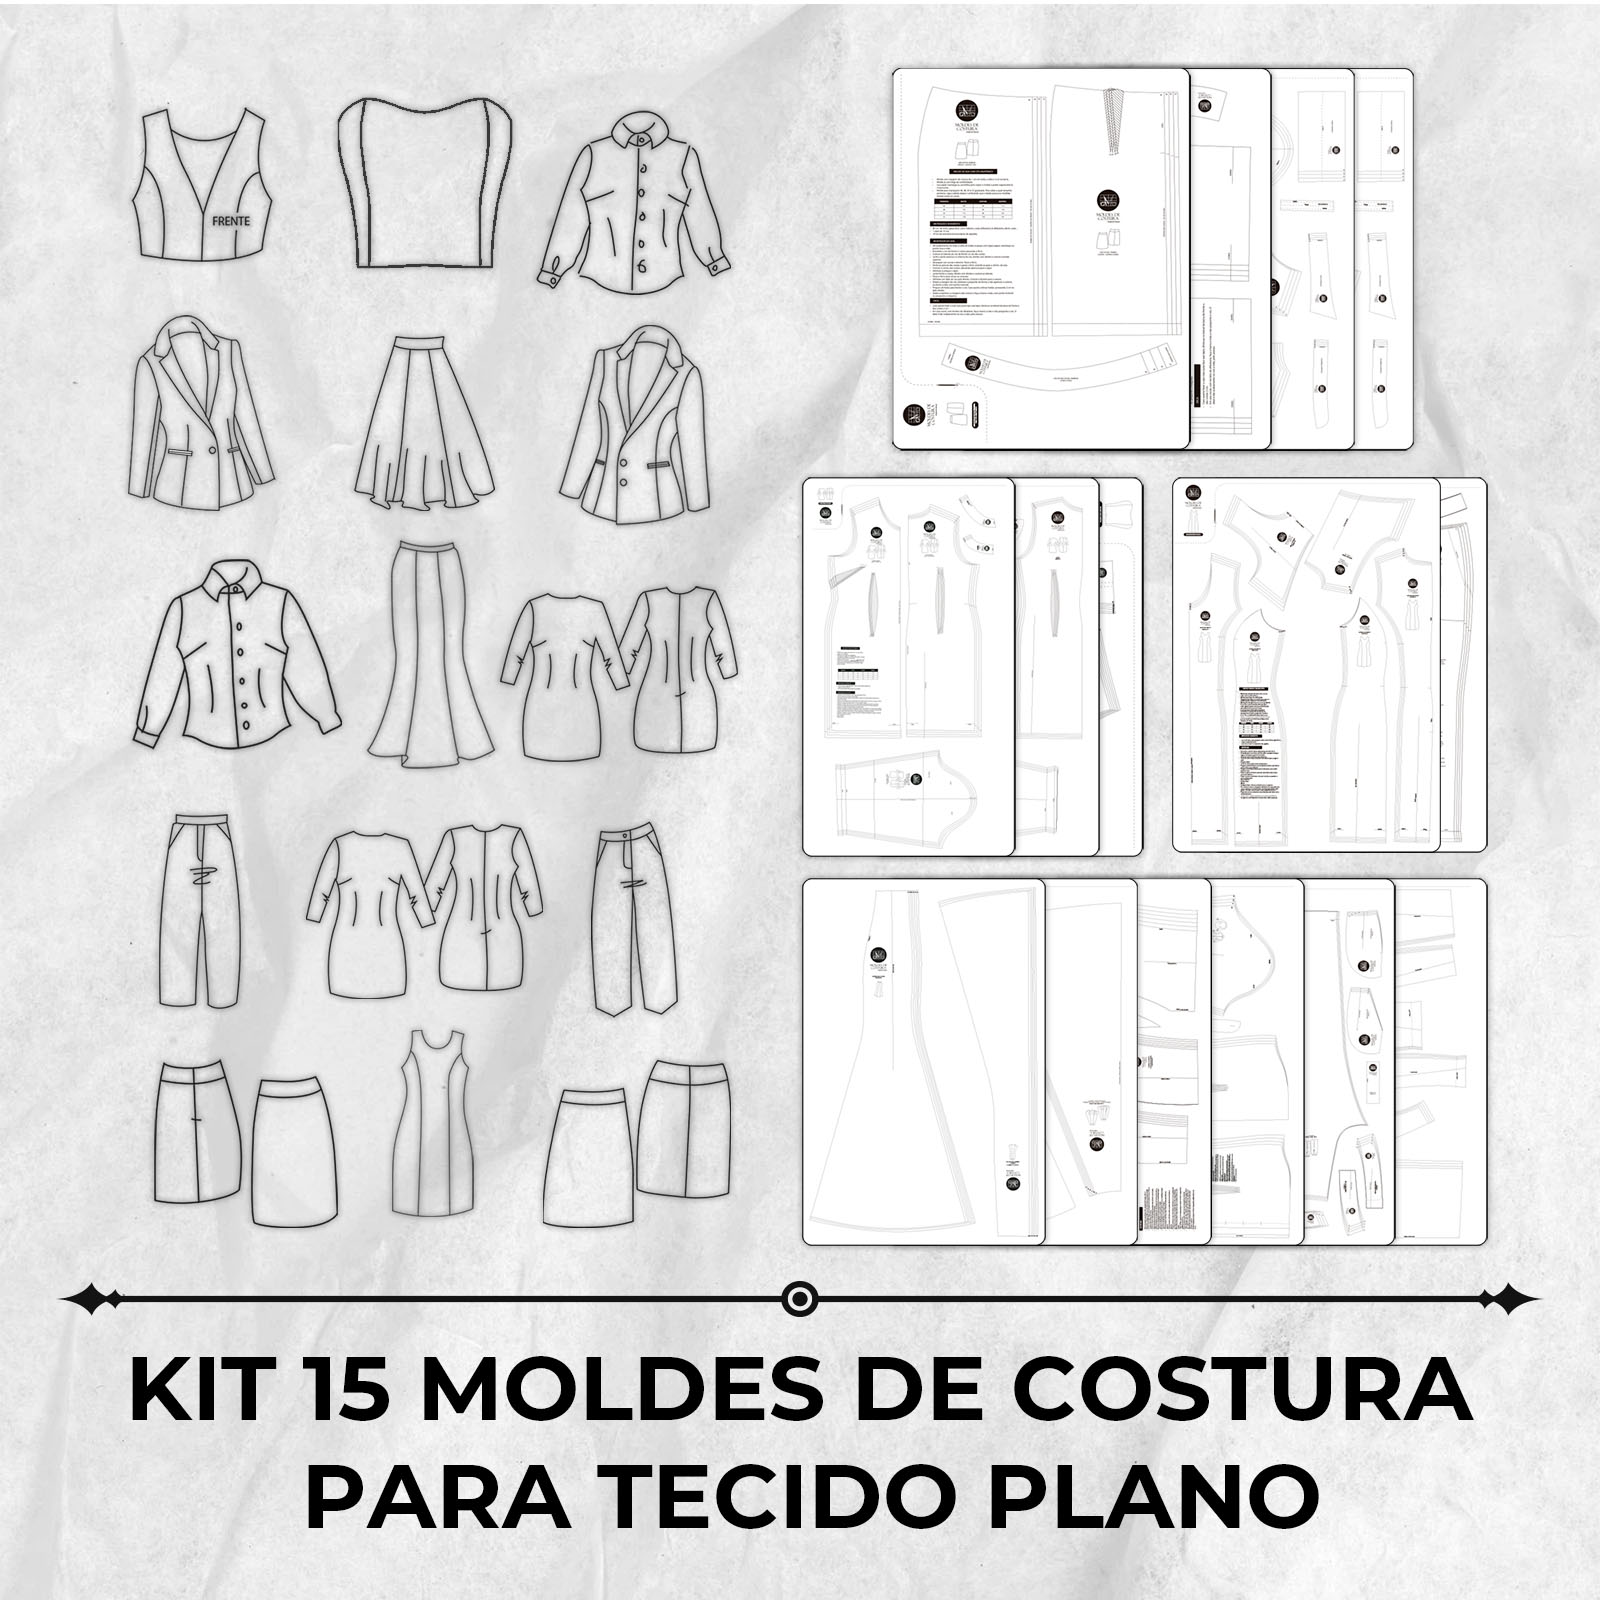 Kit 15 moldes de costura para tecido plano by Marlene Mukai